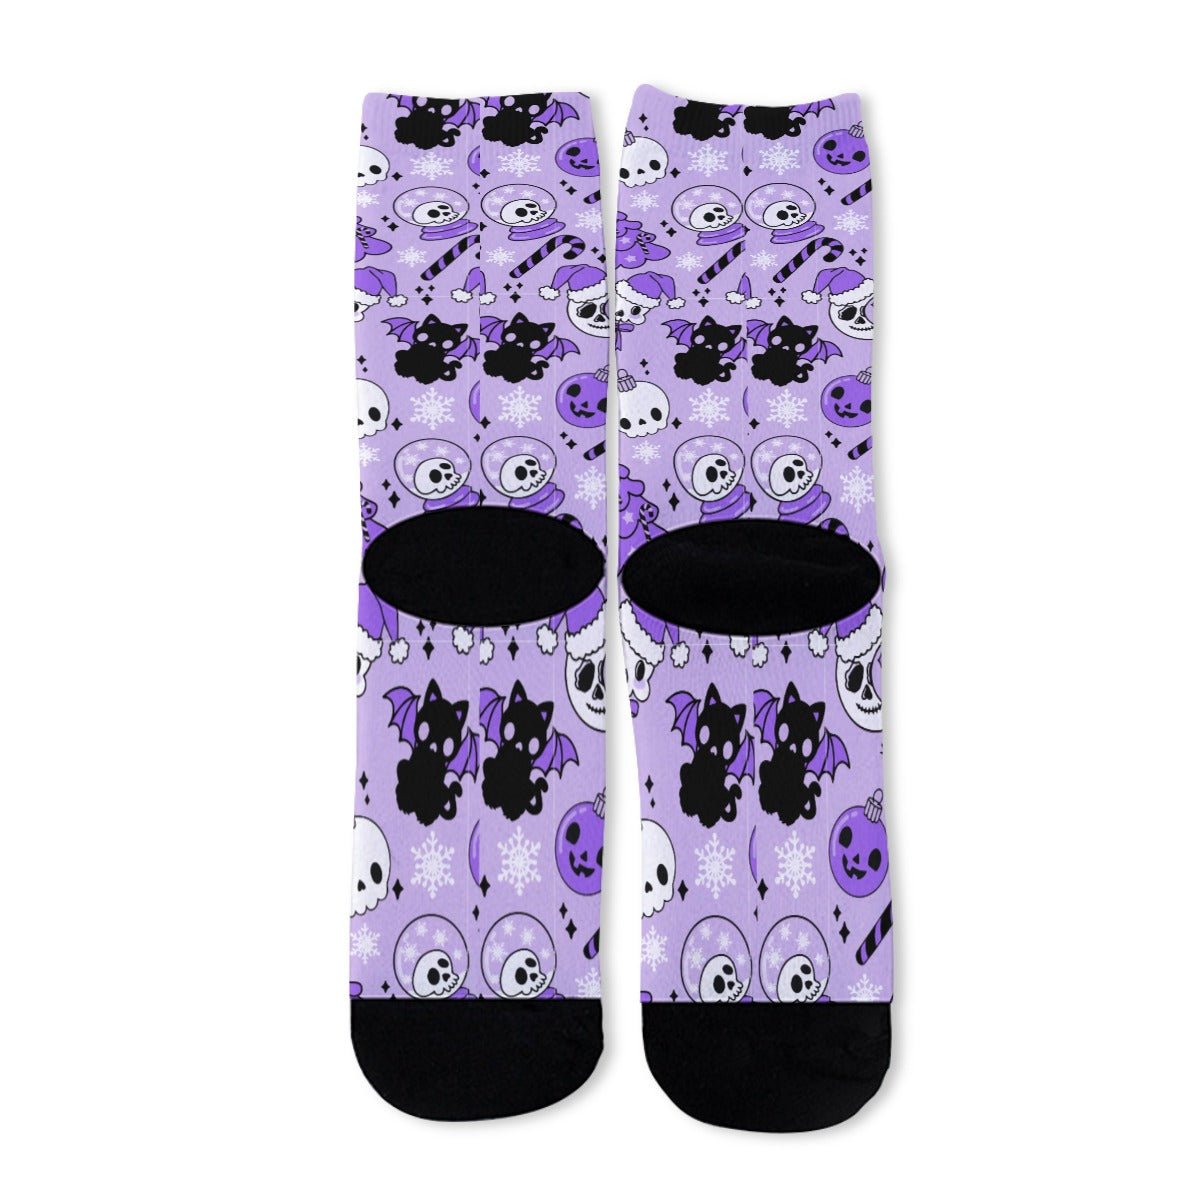 Unisex Long Socks - Creepy Purple - Festive Style